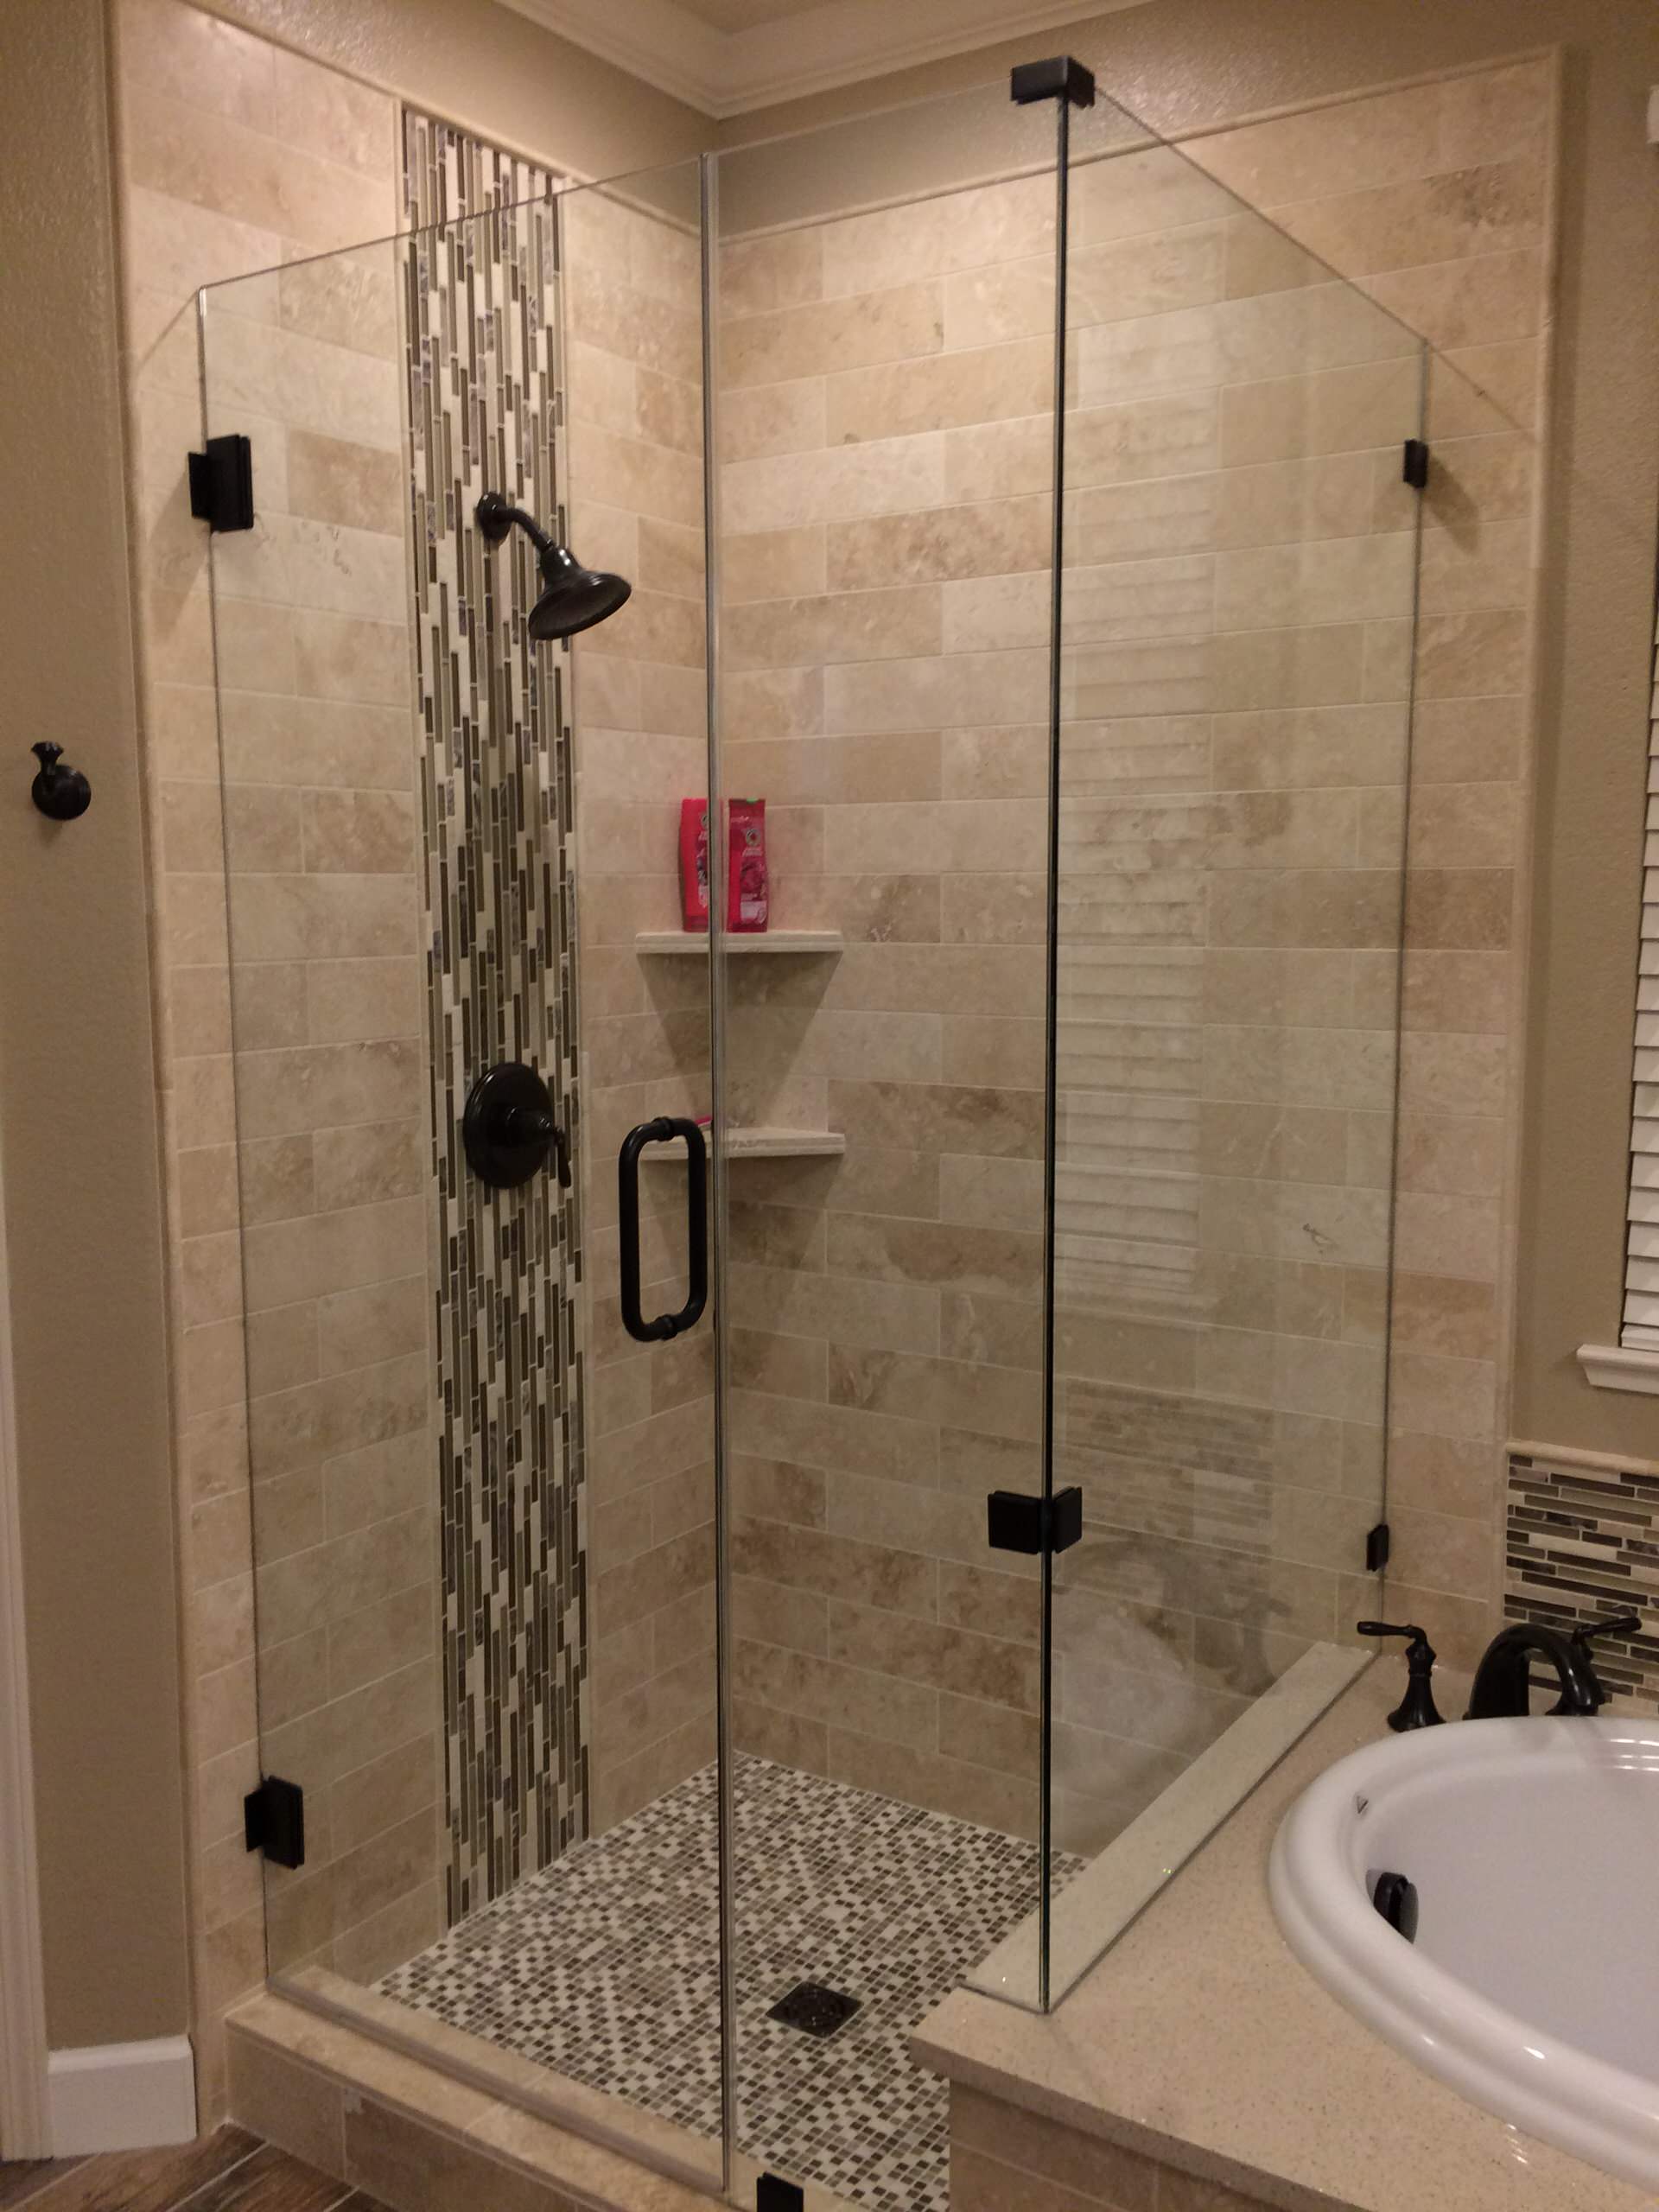 Tall custom shower enclosure with limestone tile walls.